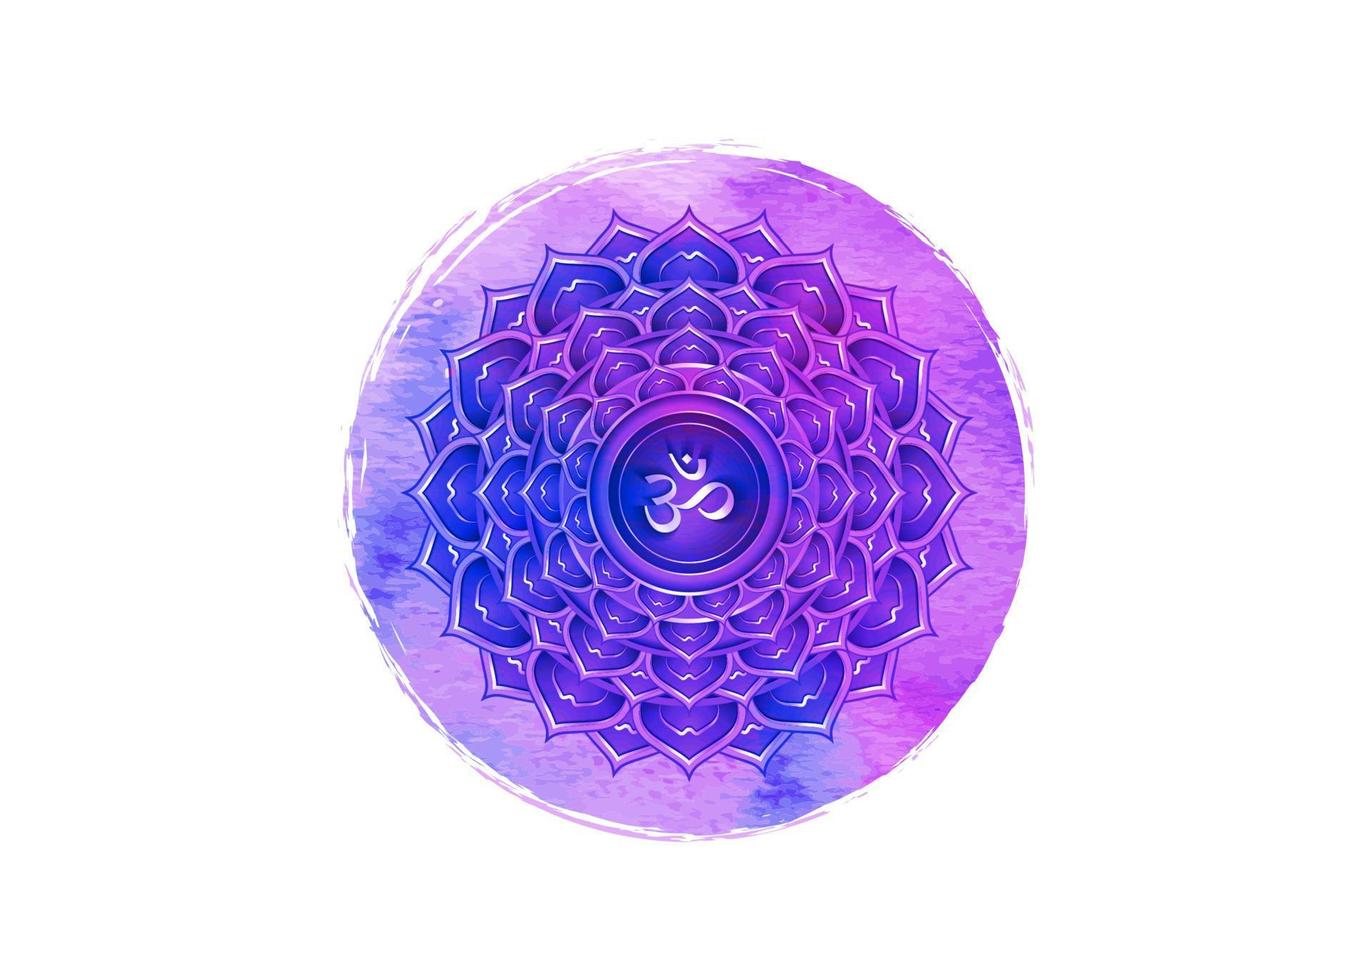 seventh chakra Sahasrara logo template. Crown chakra symbol, watercolor Purple lotus sacral sign meditation, yoga round mandala icon, symbol Om in the center, vector isolated on white background